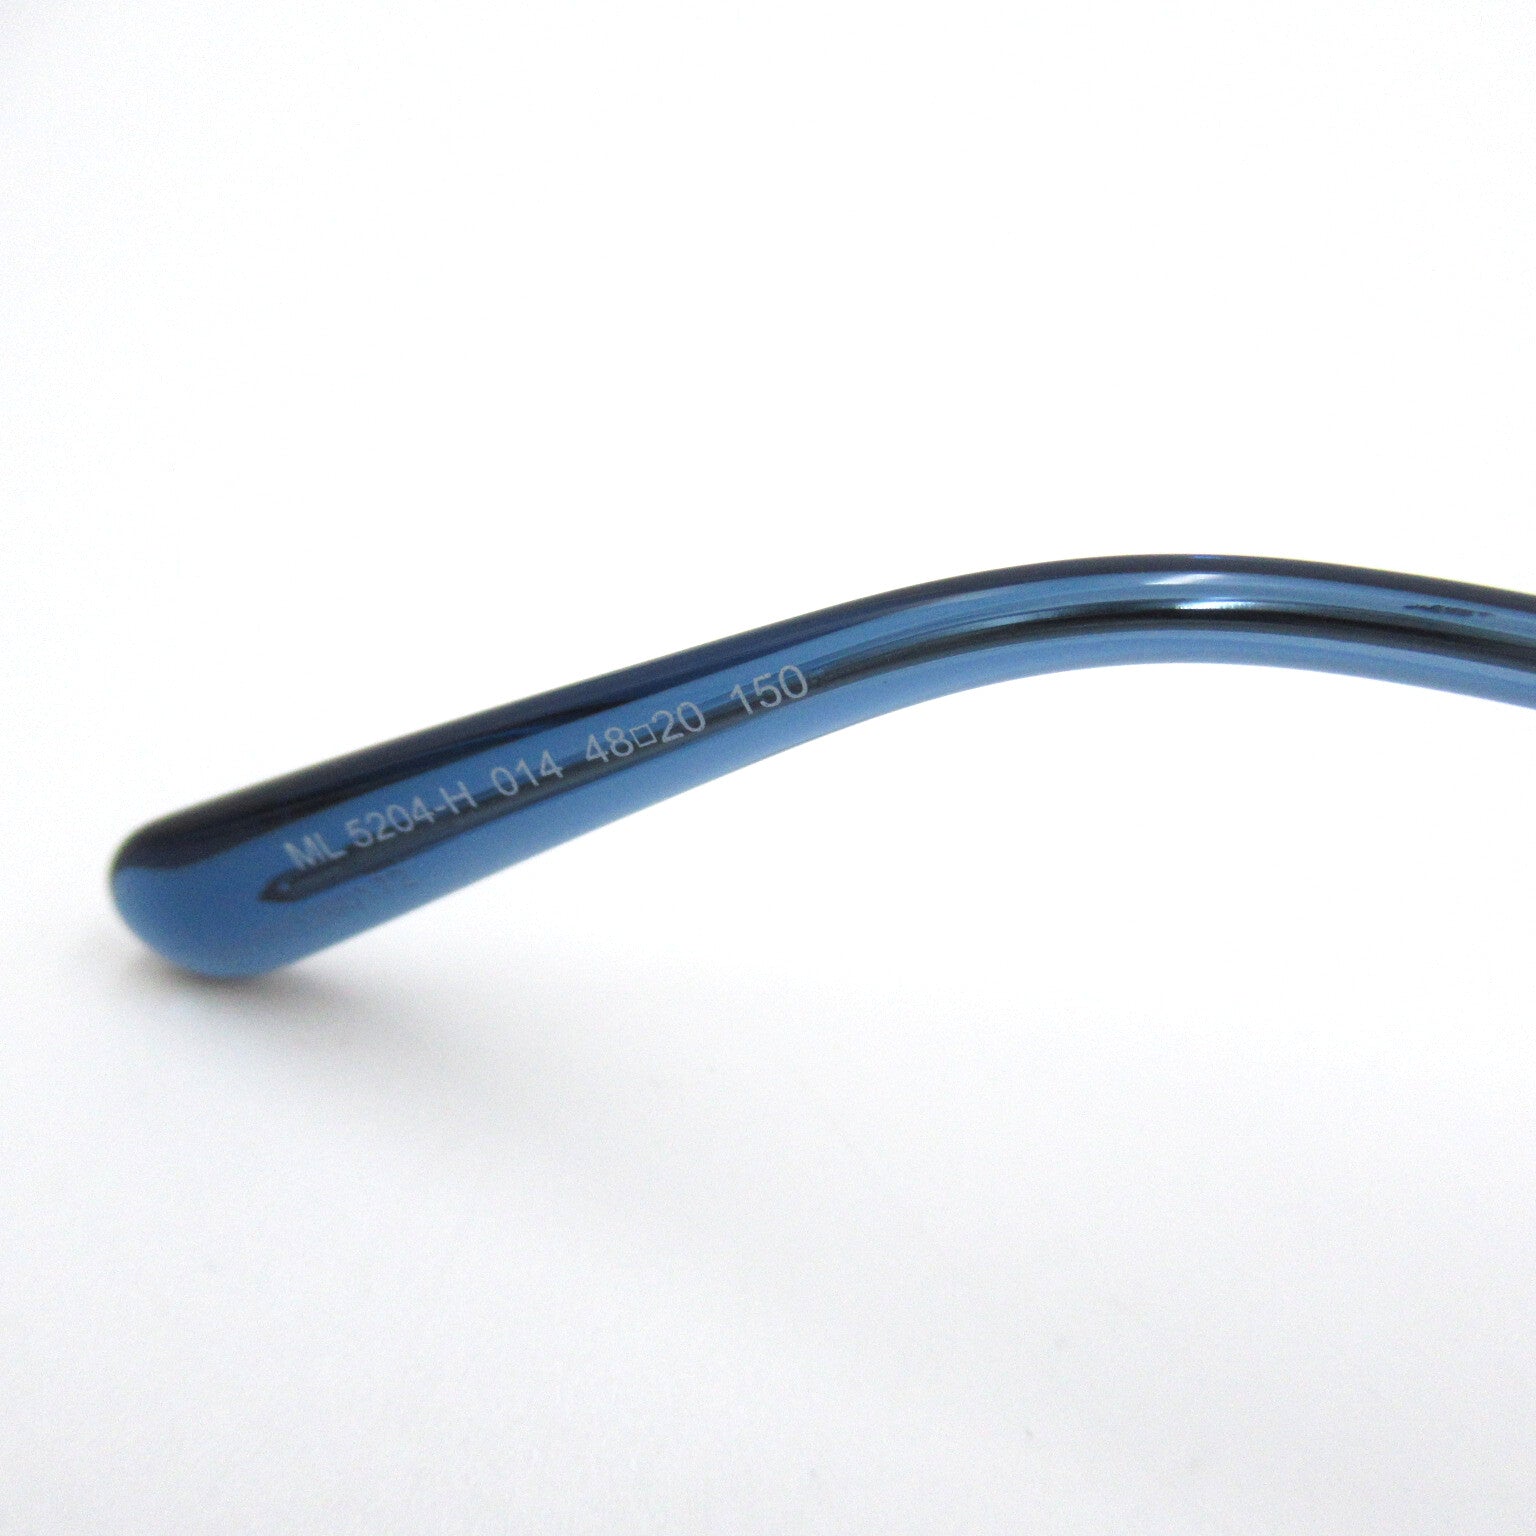 Moncler Moncler S Glasses   Metal  Blue 5204H 014(48)